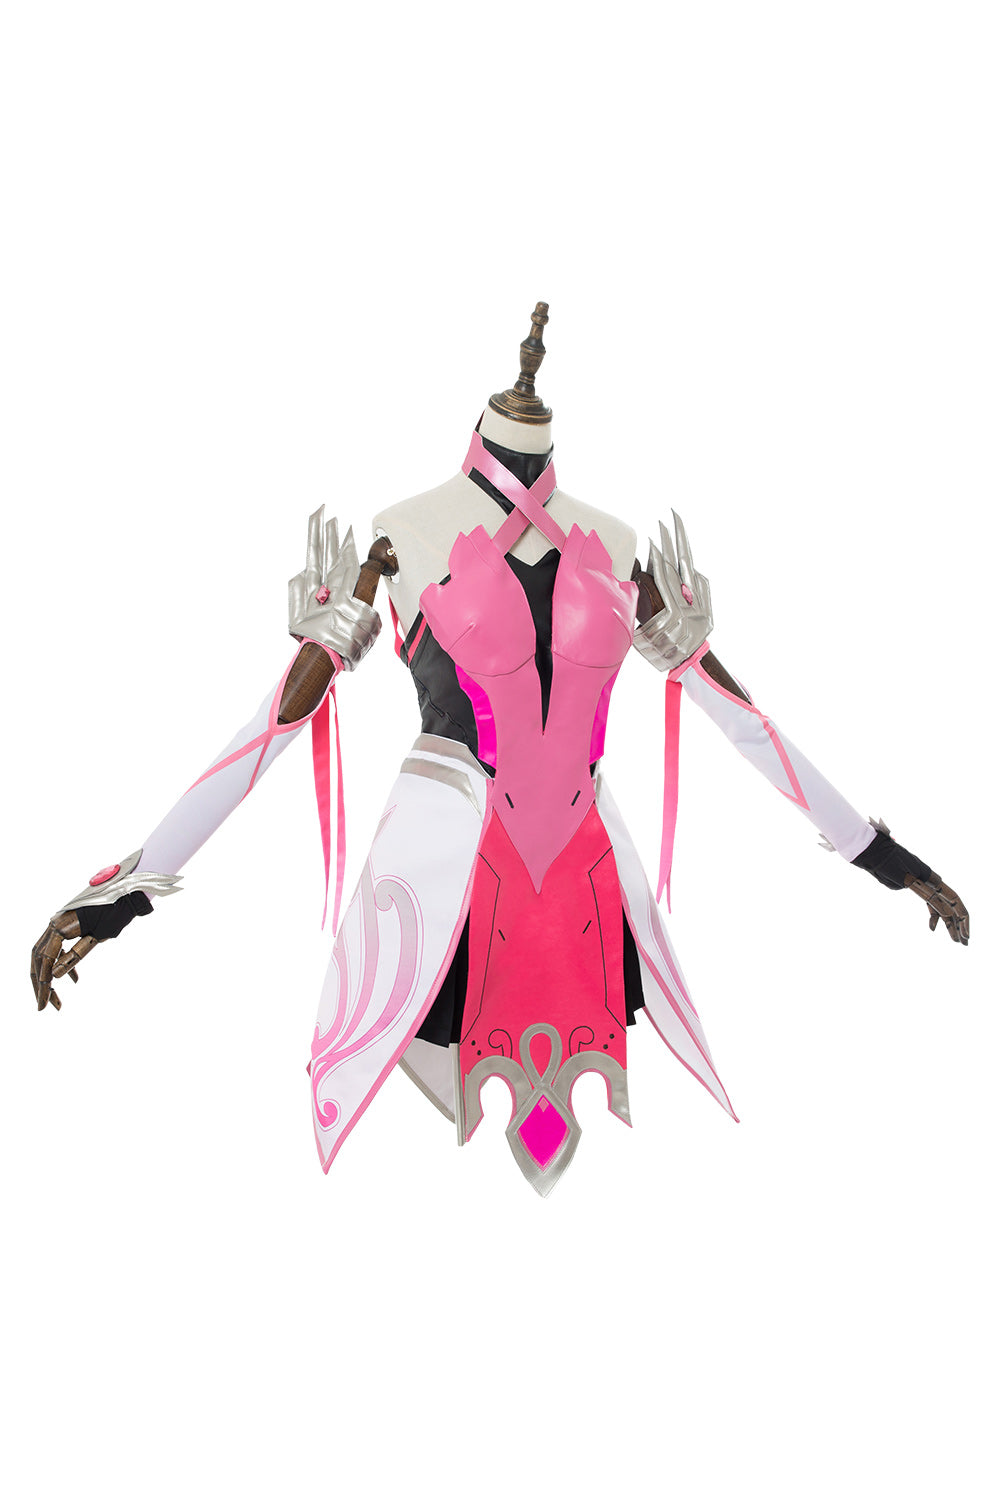 Overwatch Ange Rose Pink Mercy Skin Cosplay Costume